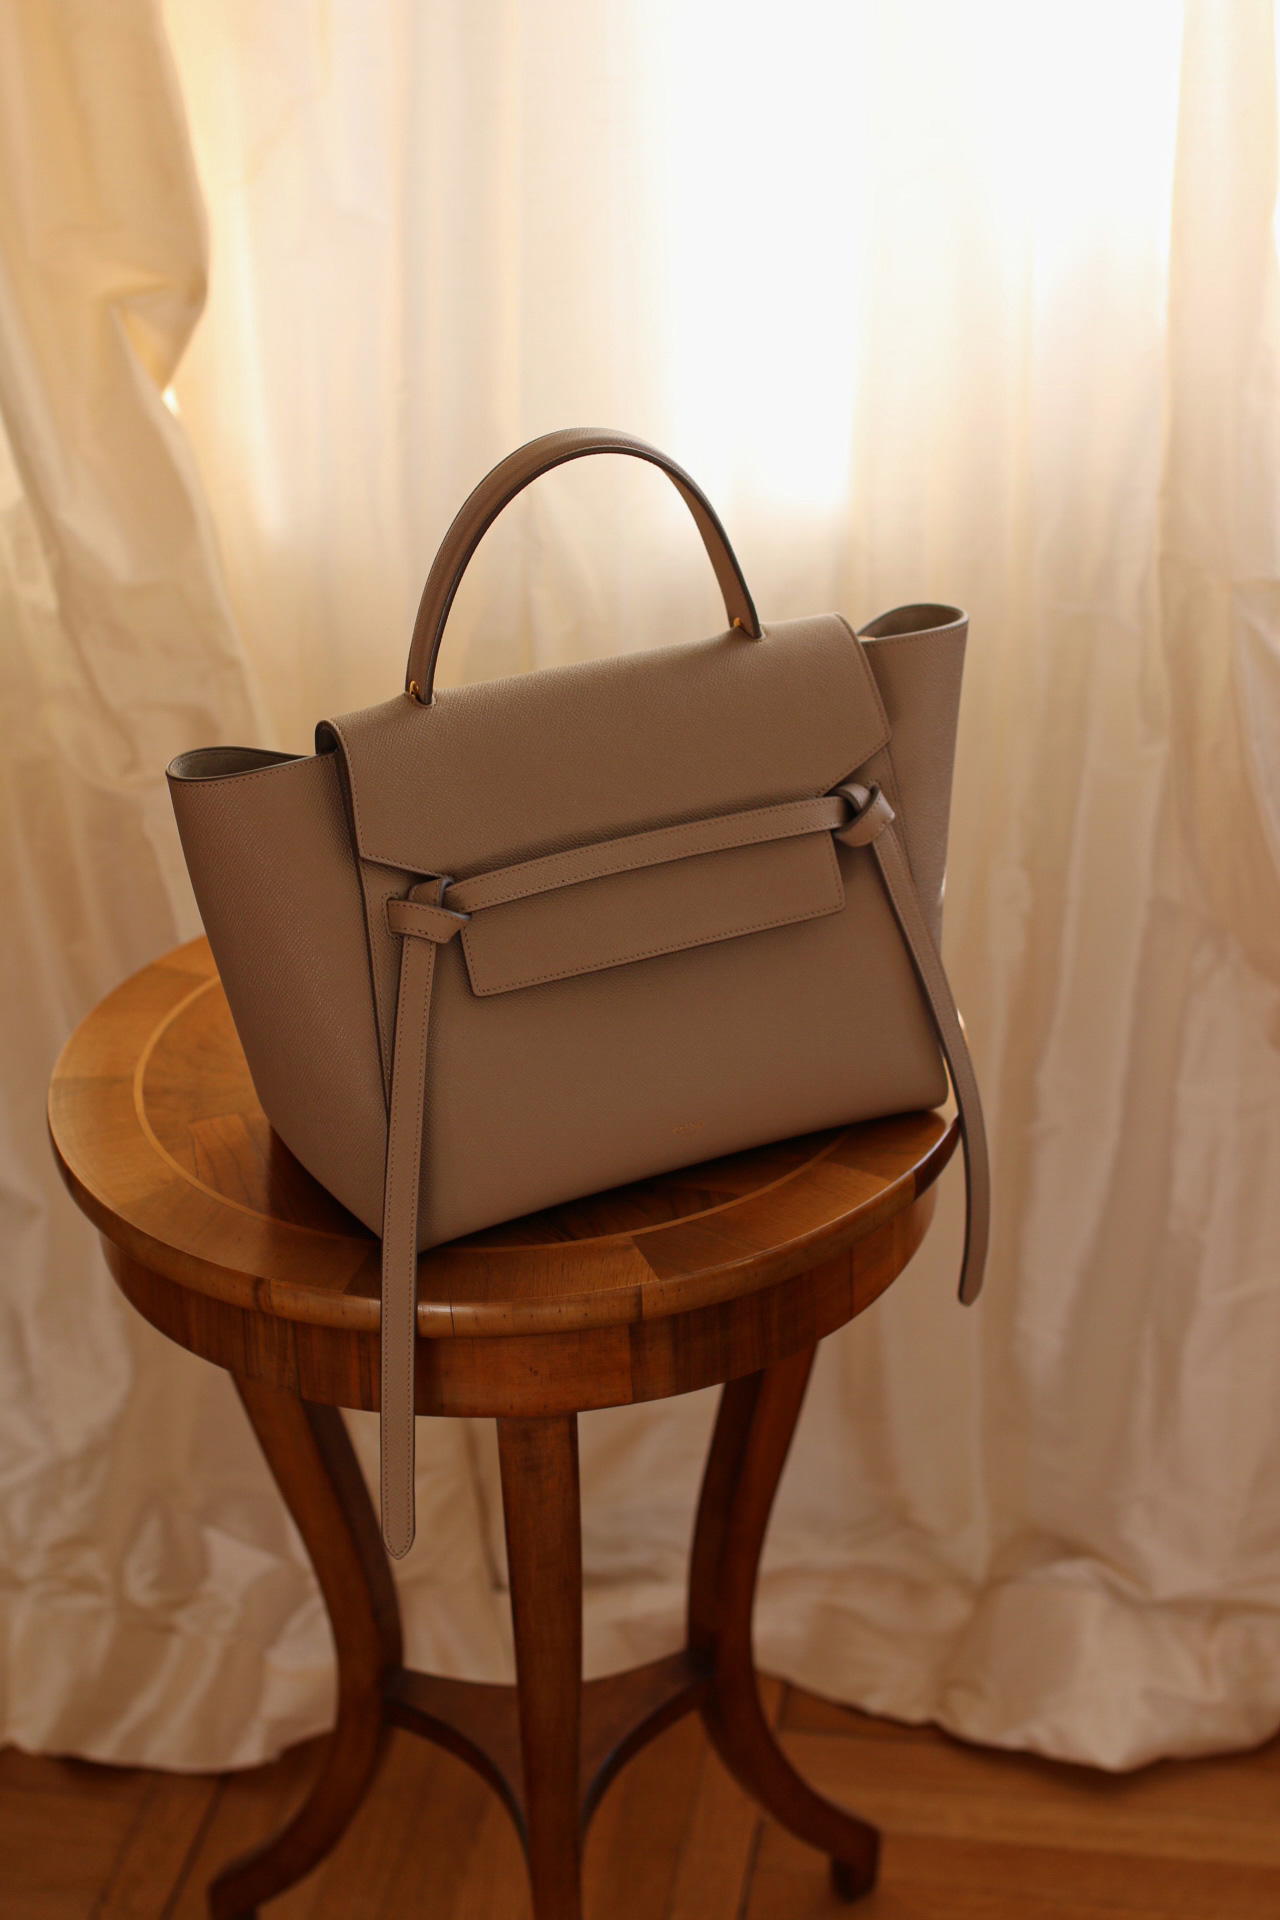 Handbag Review: My Celine Mini Belt Bag